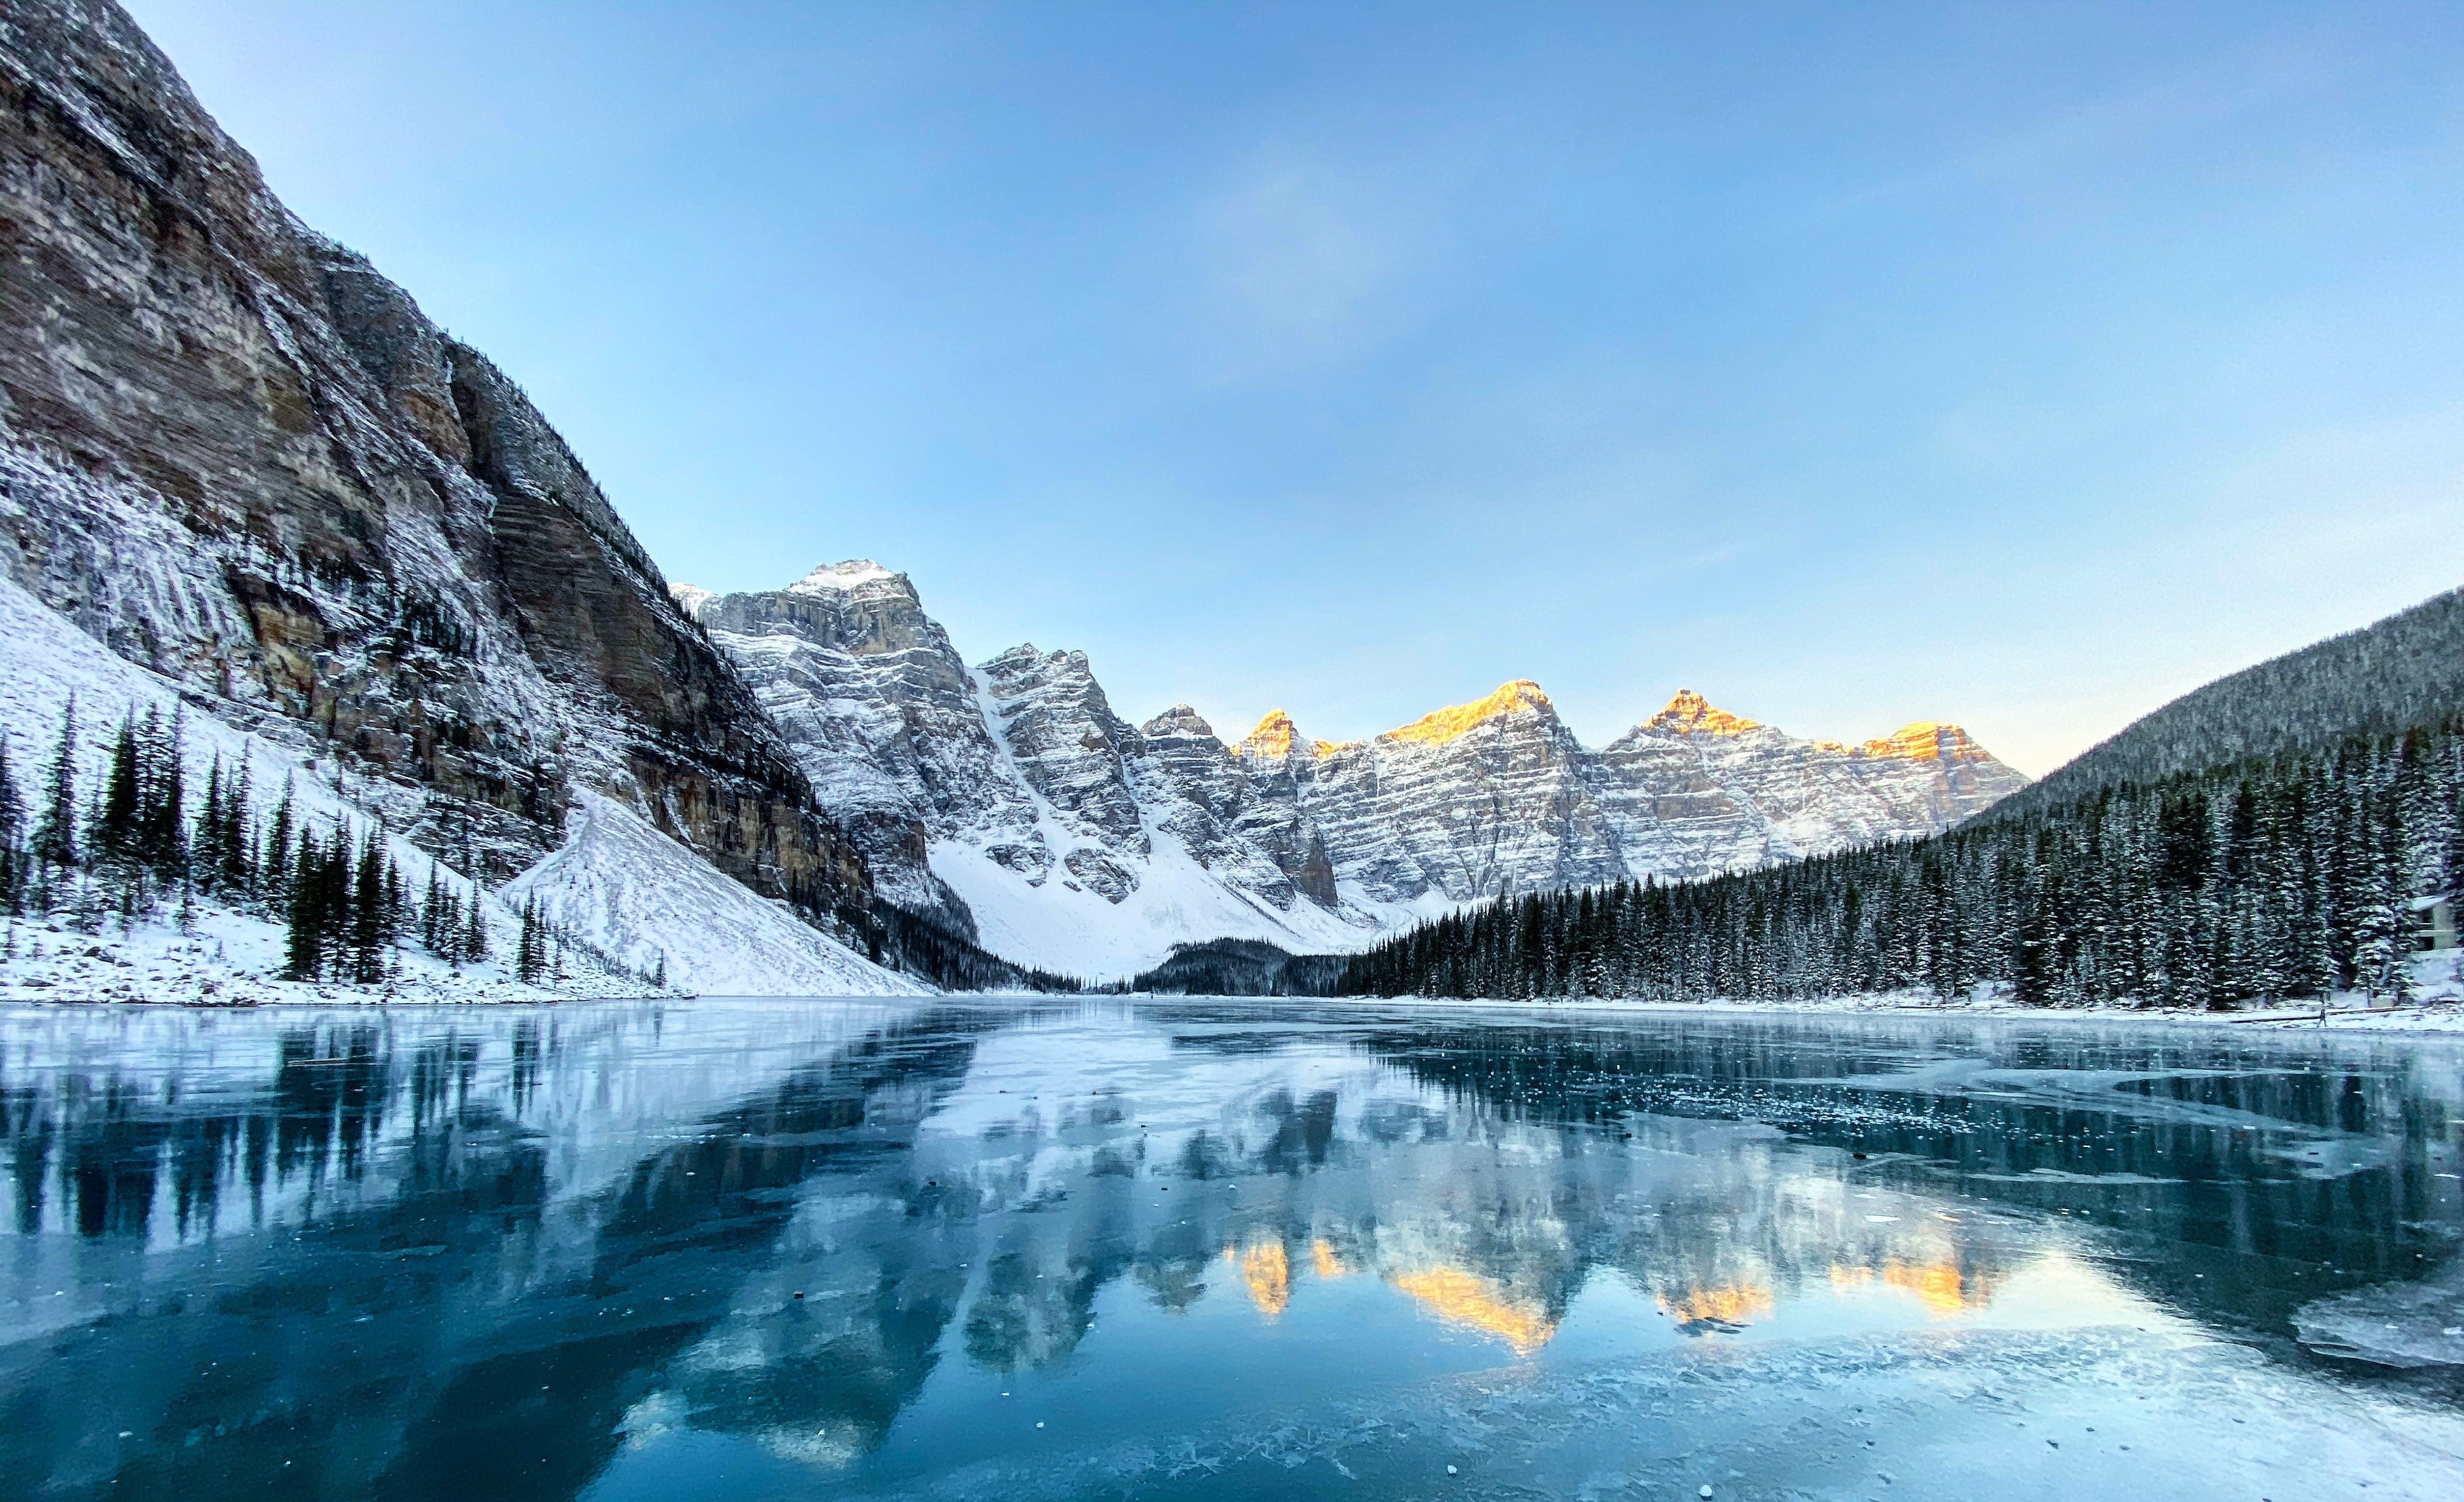 Канада 4. Озеро Moraine Канада. Озеро Морейн, Канада зима. Озеро Морейн в Канаде зимой. Канада озеро Морейн HD.